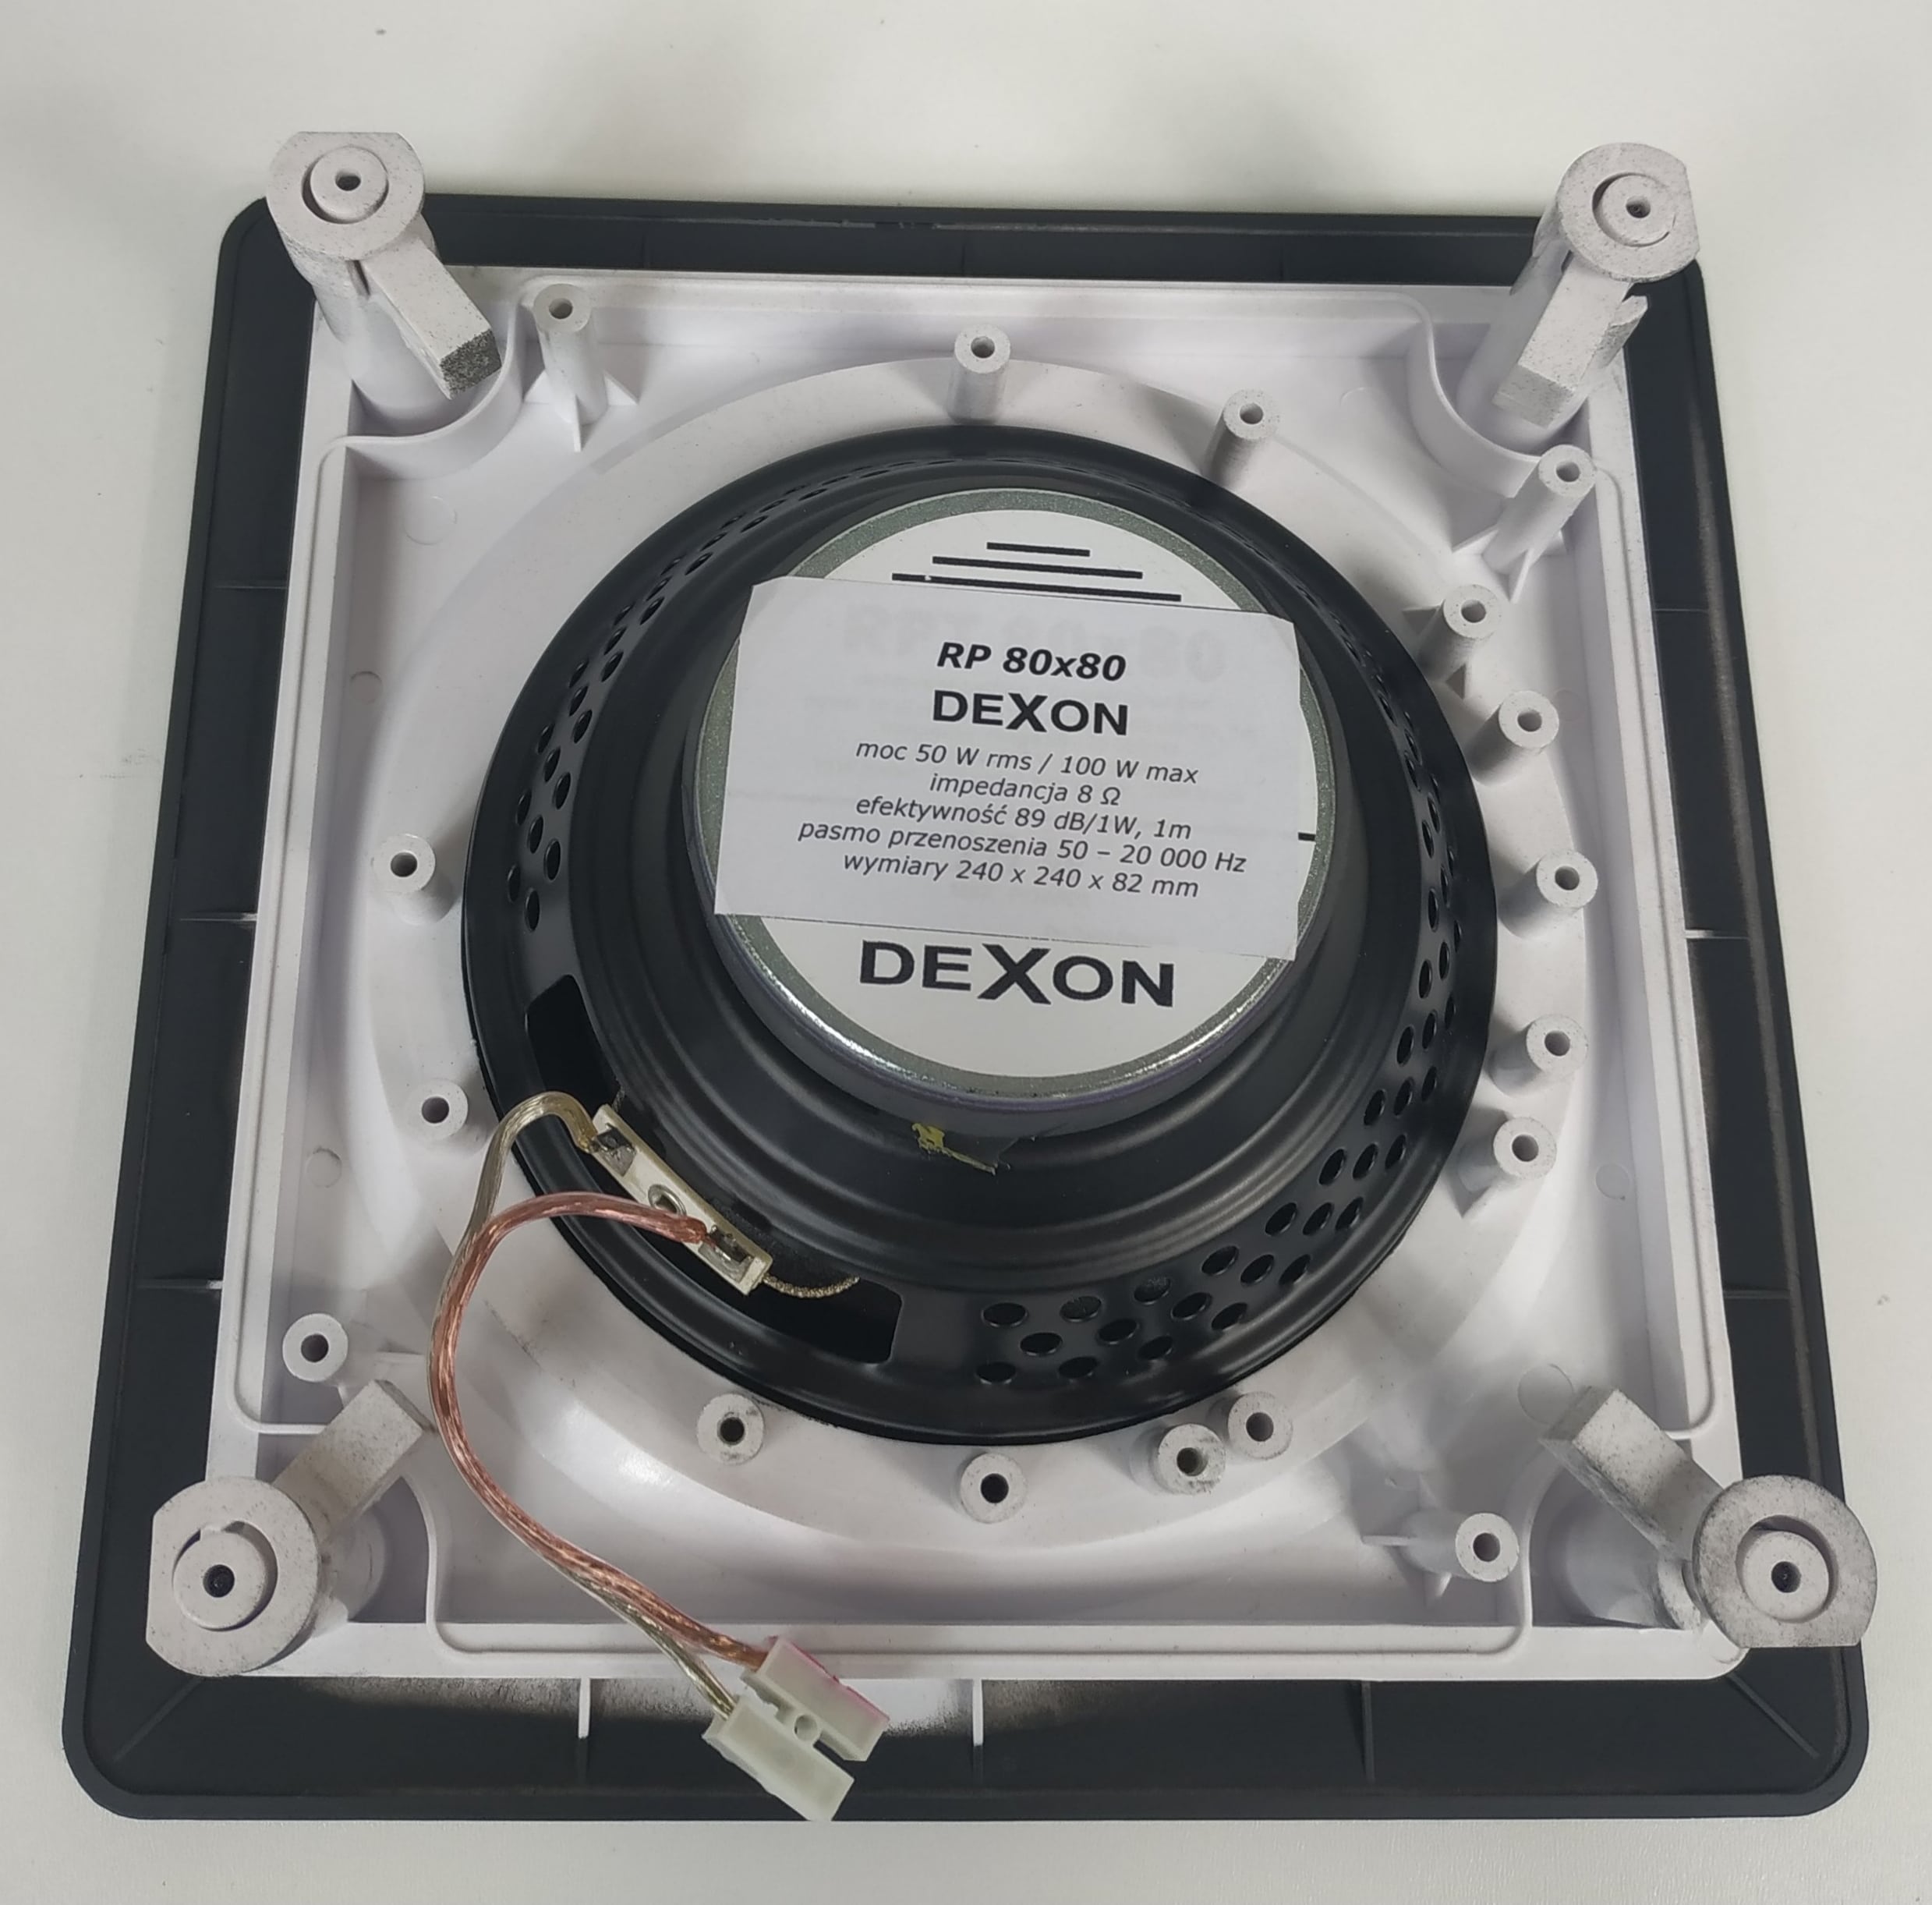 Dexon RP 80x80 back